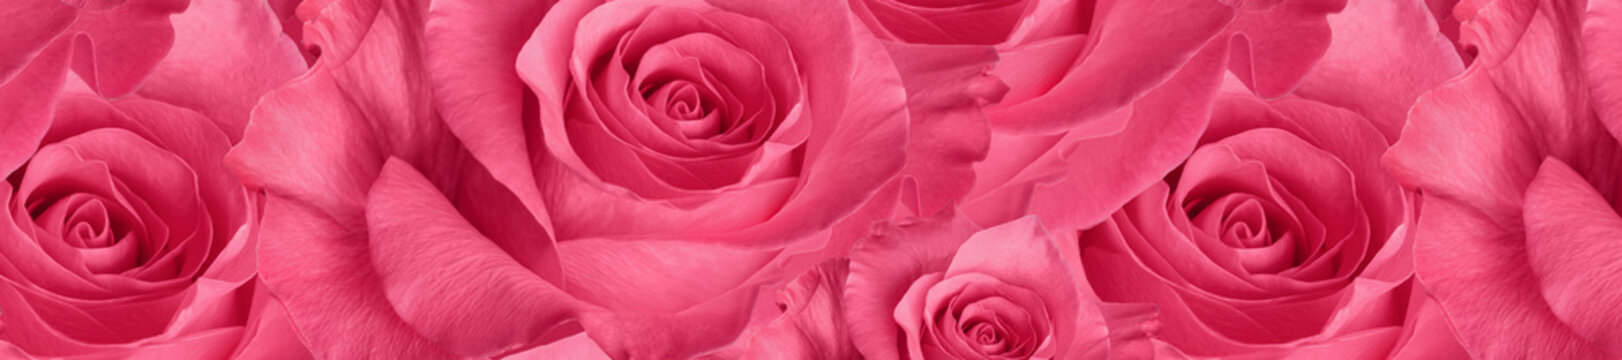 panorama  beautiful  pink rose